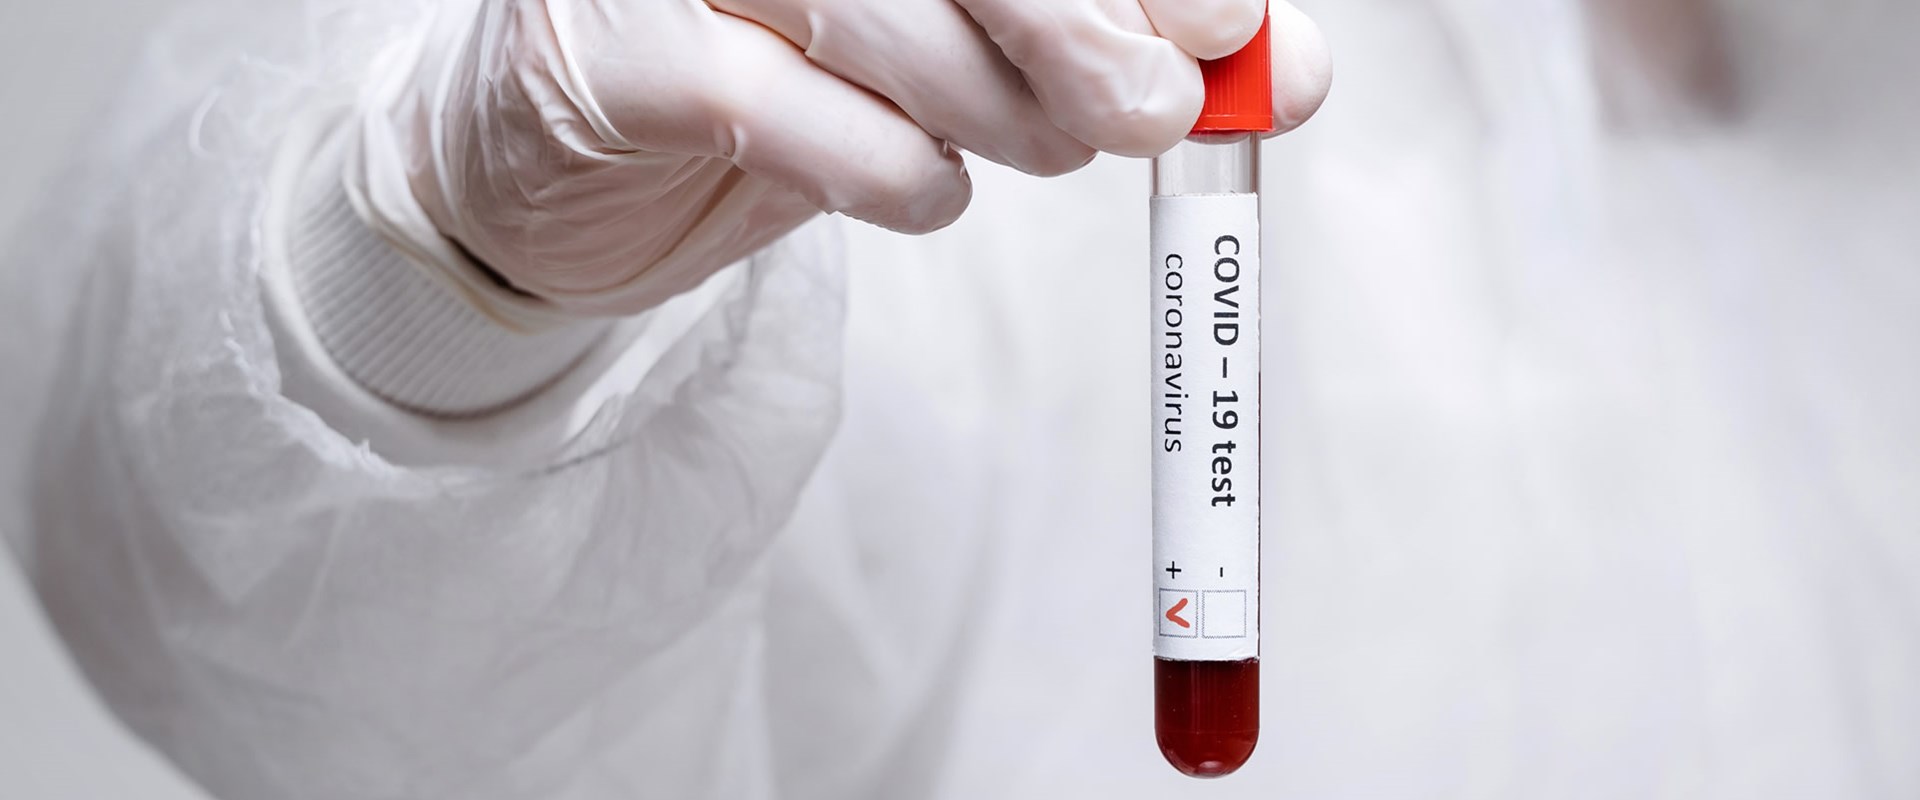 COVID 19 RT-PCR test